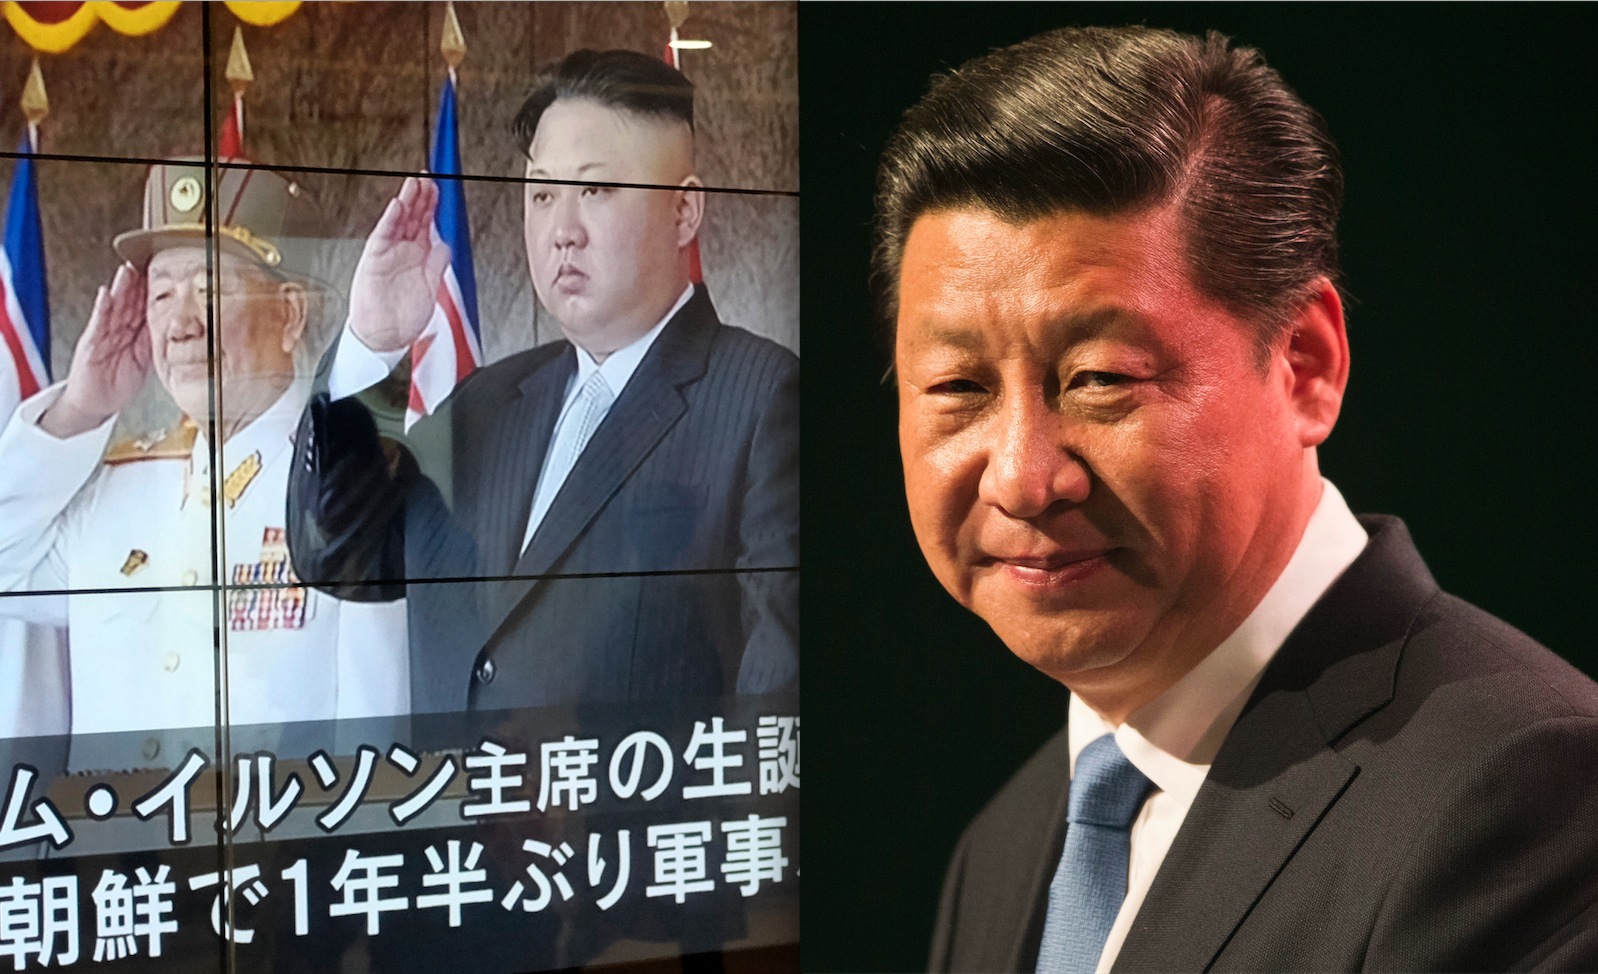 Nordkorea-Spezial: Geheime Machtspiele mit Atomwaffen – Kim Jong Un ist Xi Jinpings großes Problem